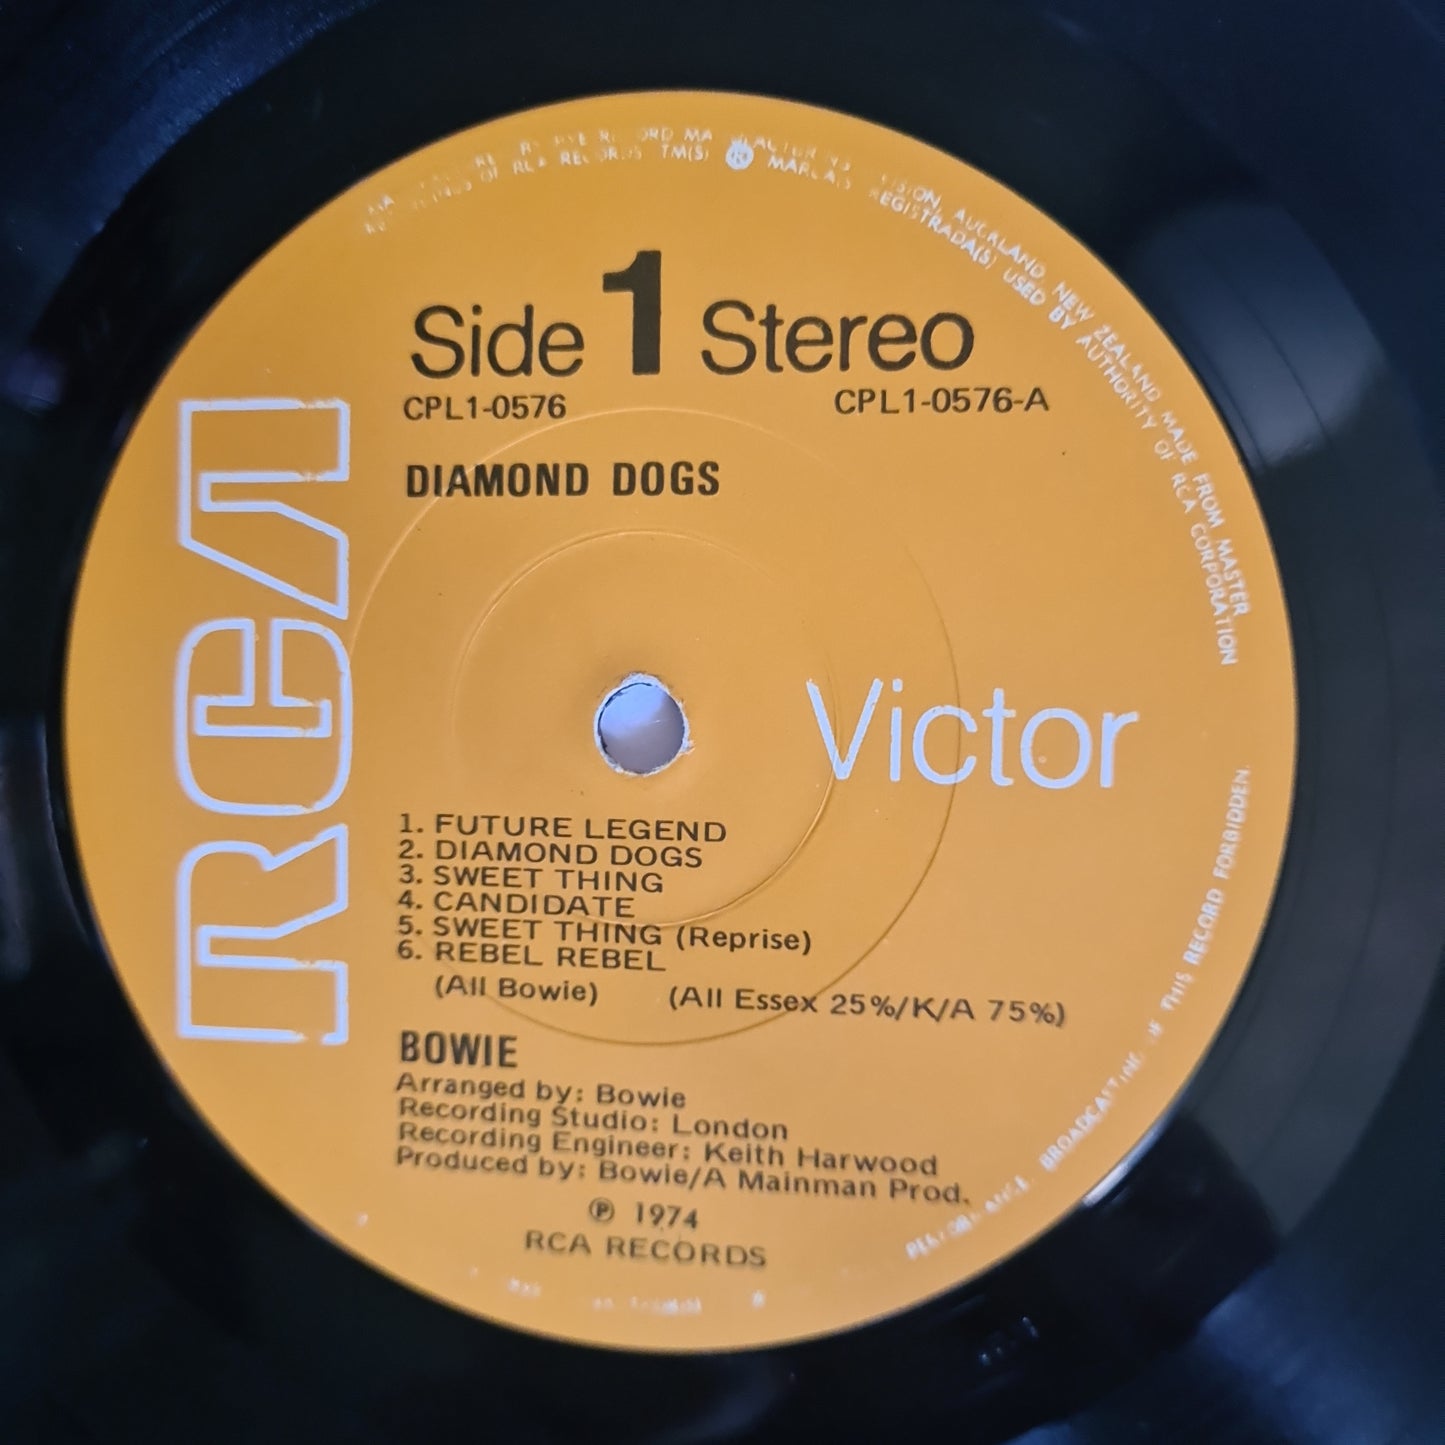 David Bowie – Diamond Dogs - 1974 (Gatefold New Zealand Pressing) - Vinyl Record